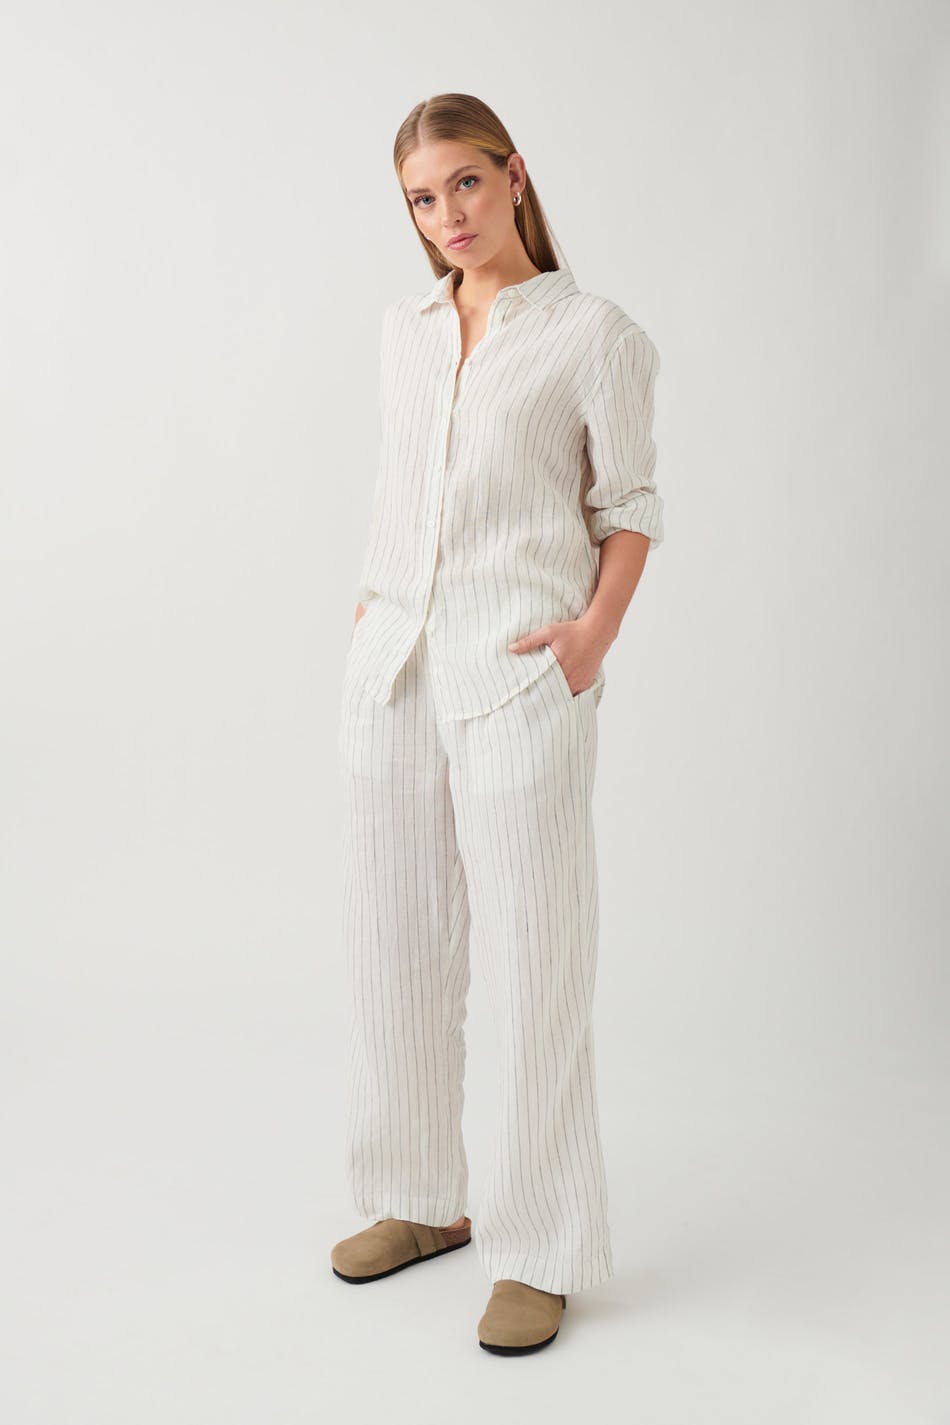 Gina Tricot - Linen trousers - linnebyxor - White - XS - Female